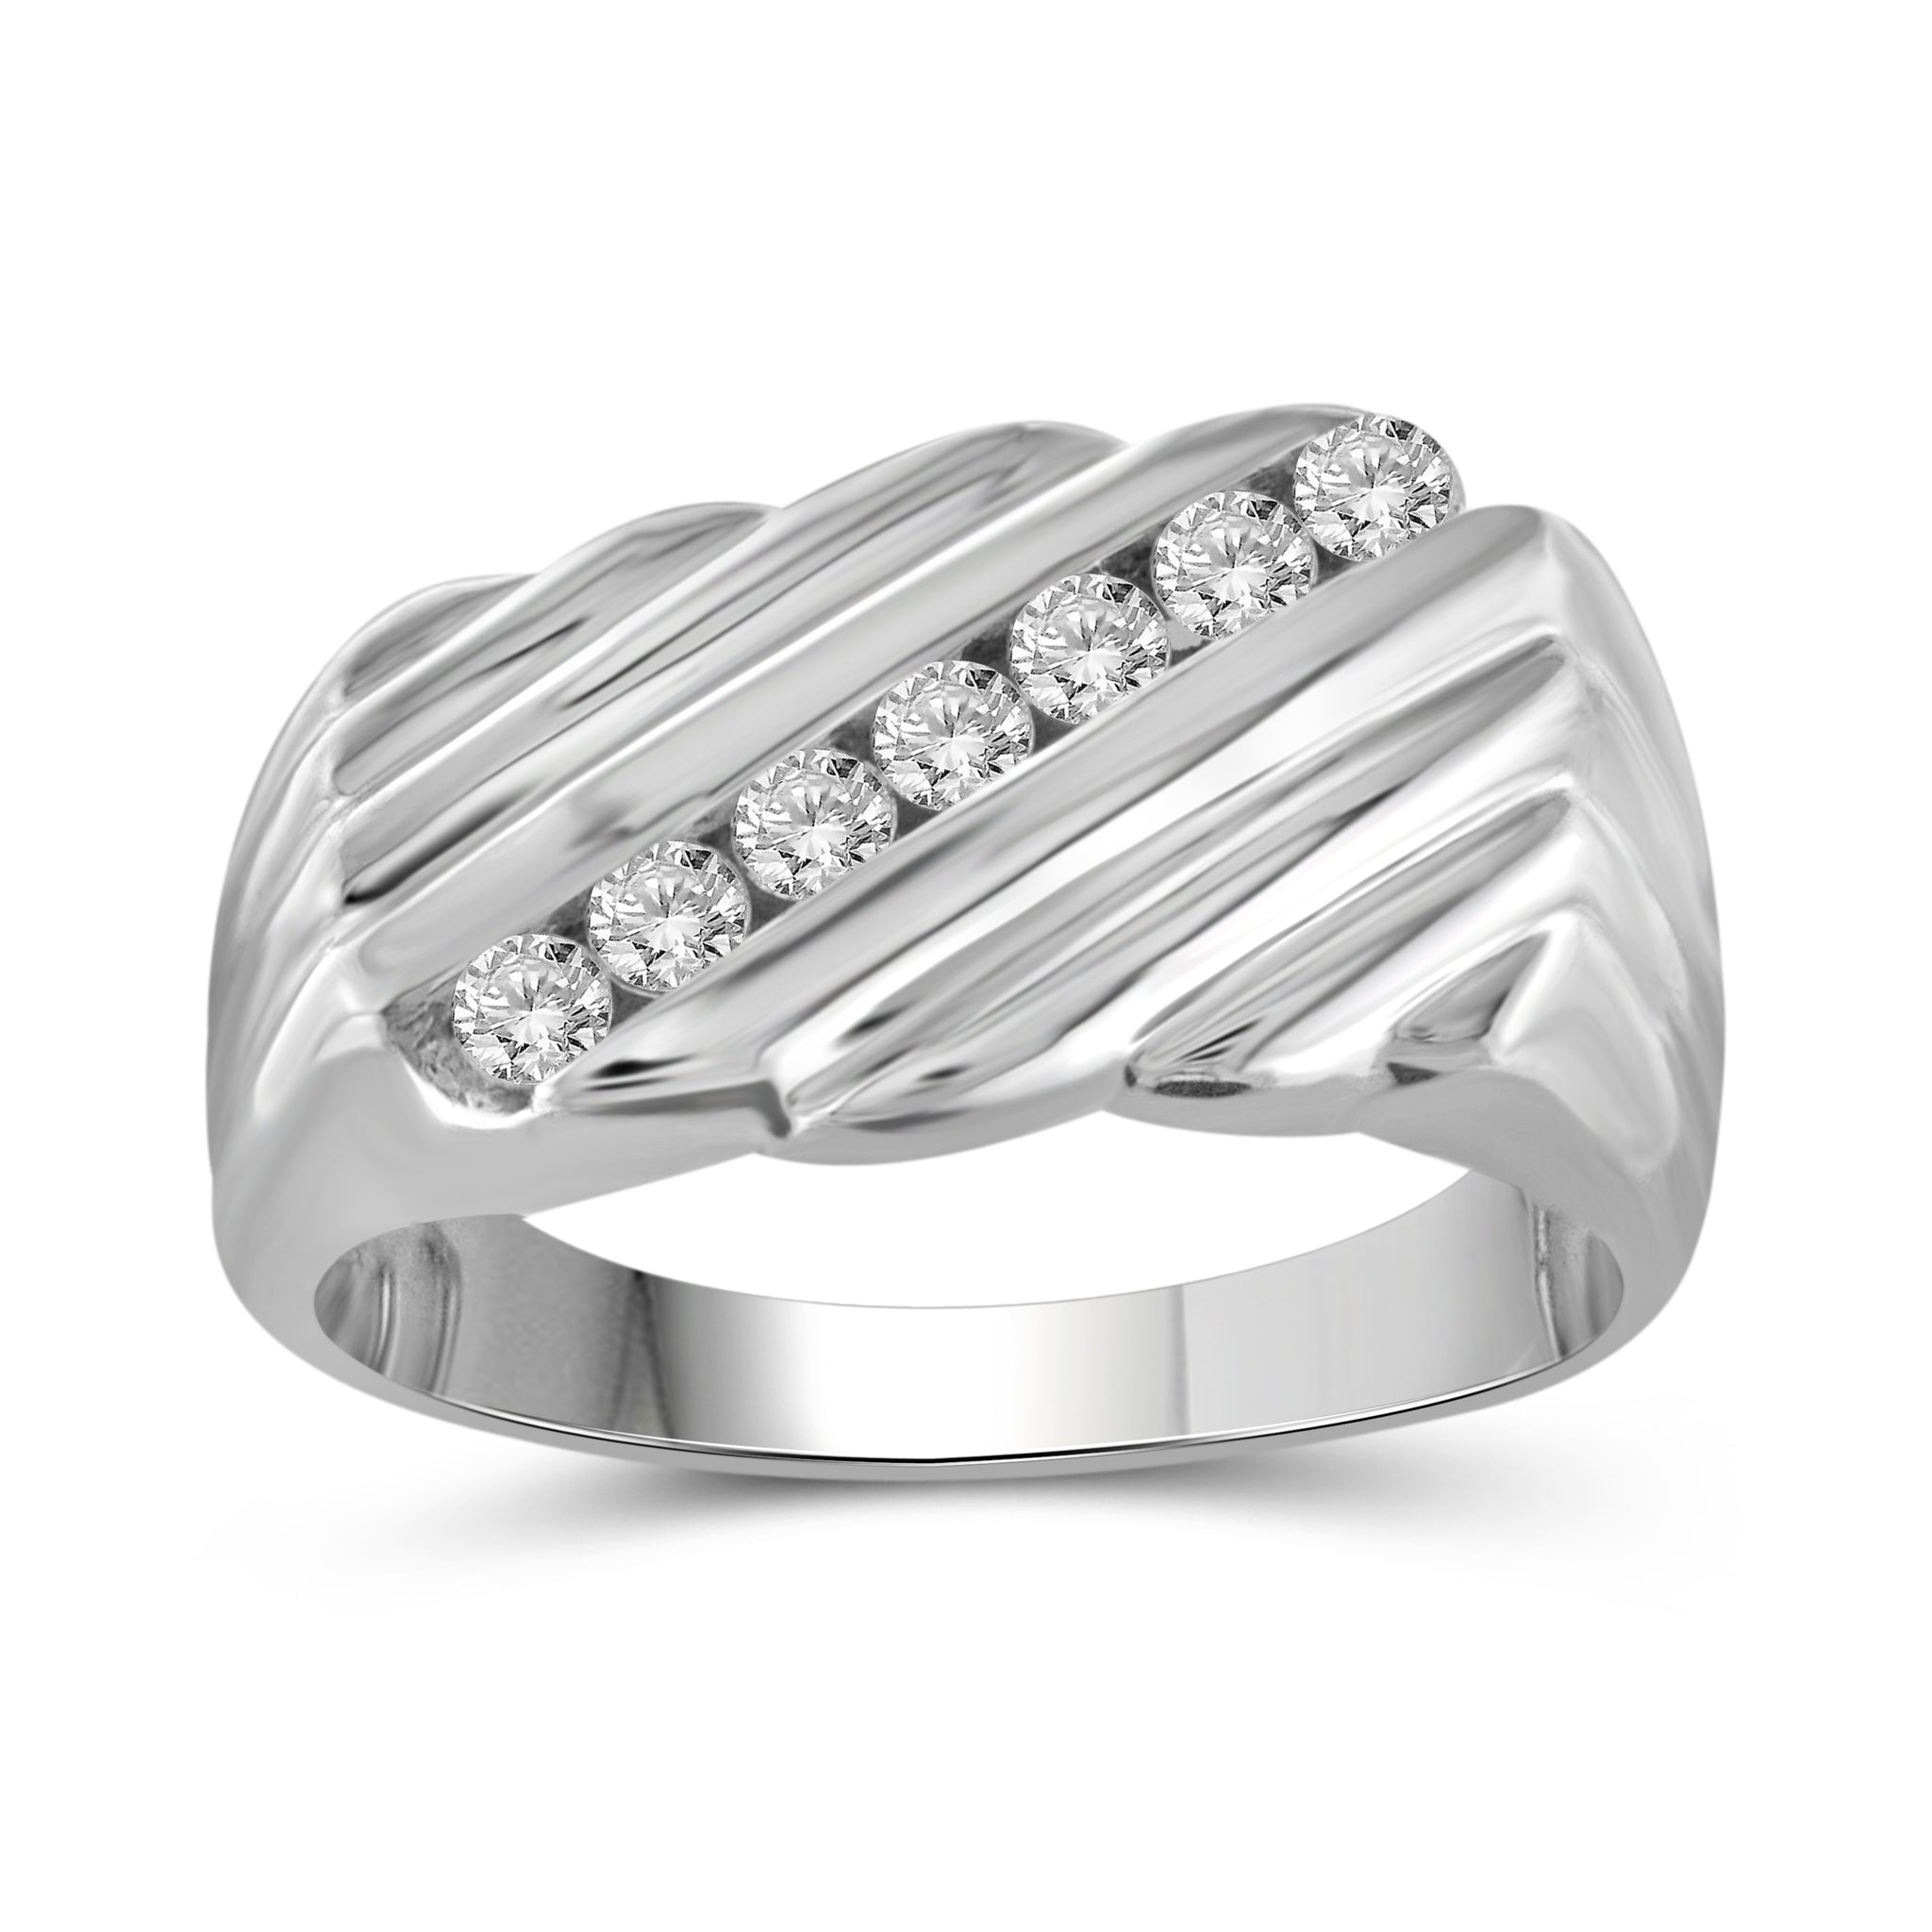 Jewelnova 1/2 Carat White Diamond 10k Gold Men's Ring - Assorted Colors